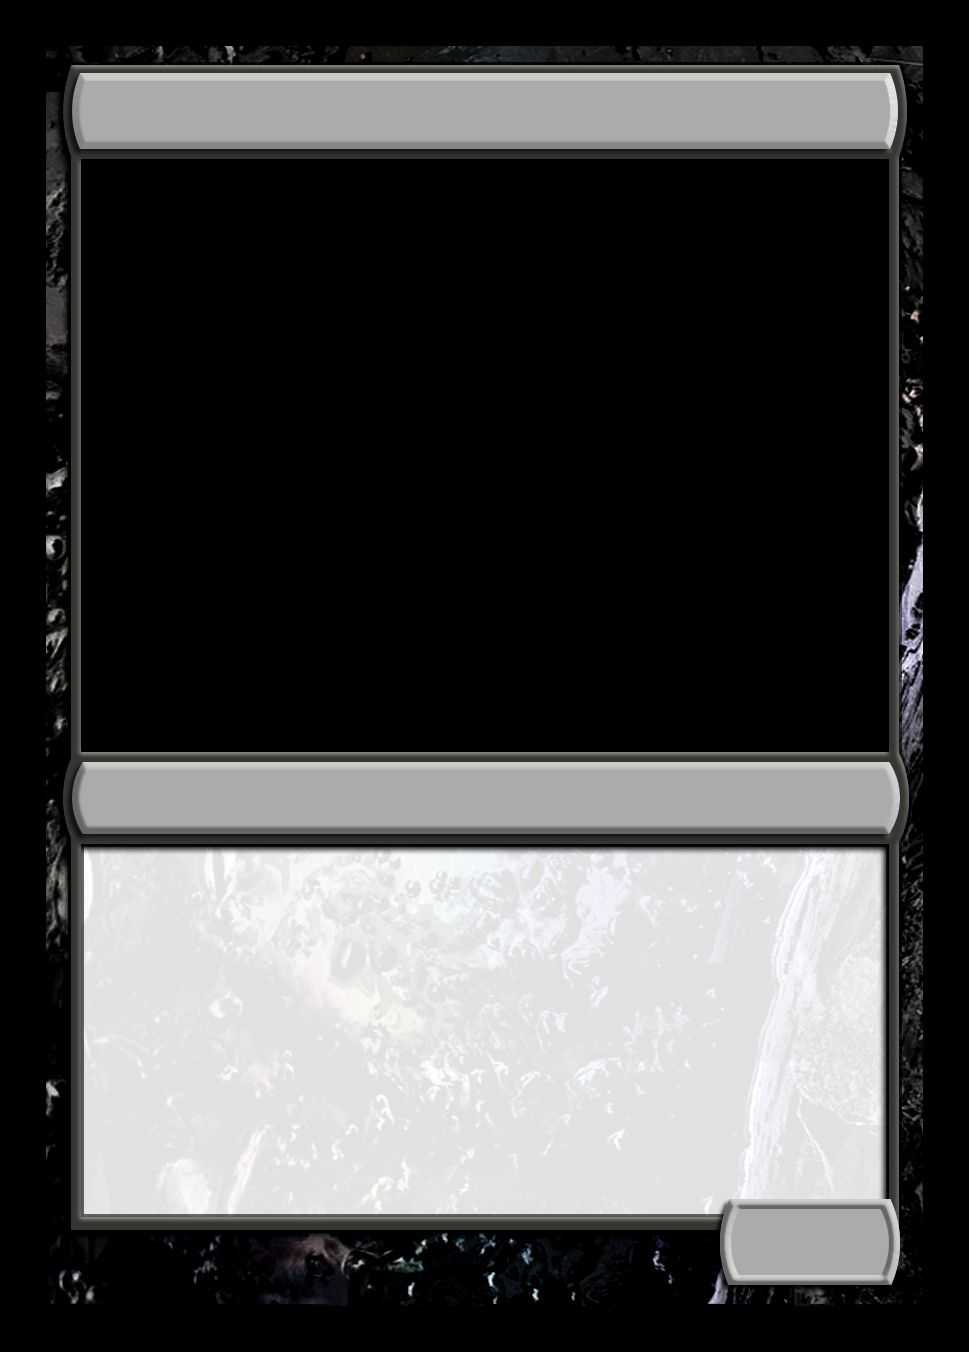 Black Magic The Gathering Card Blank Template - Imgflip With Regard To Blank Magic Card Template